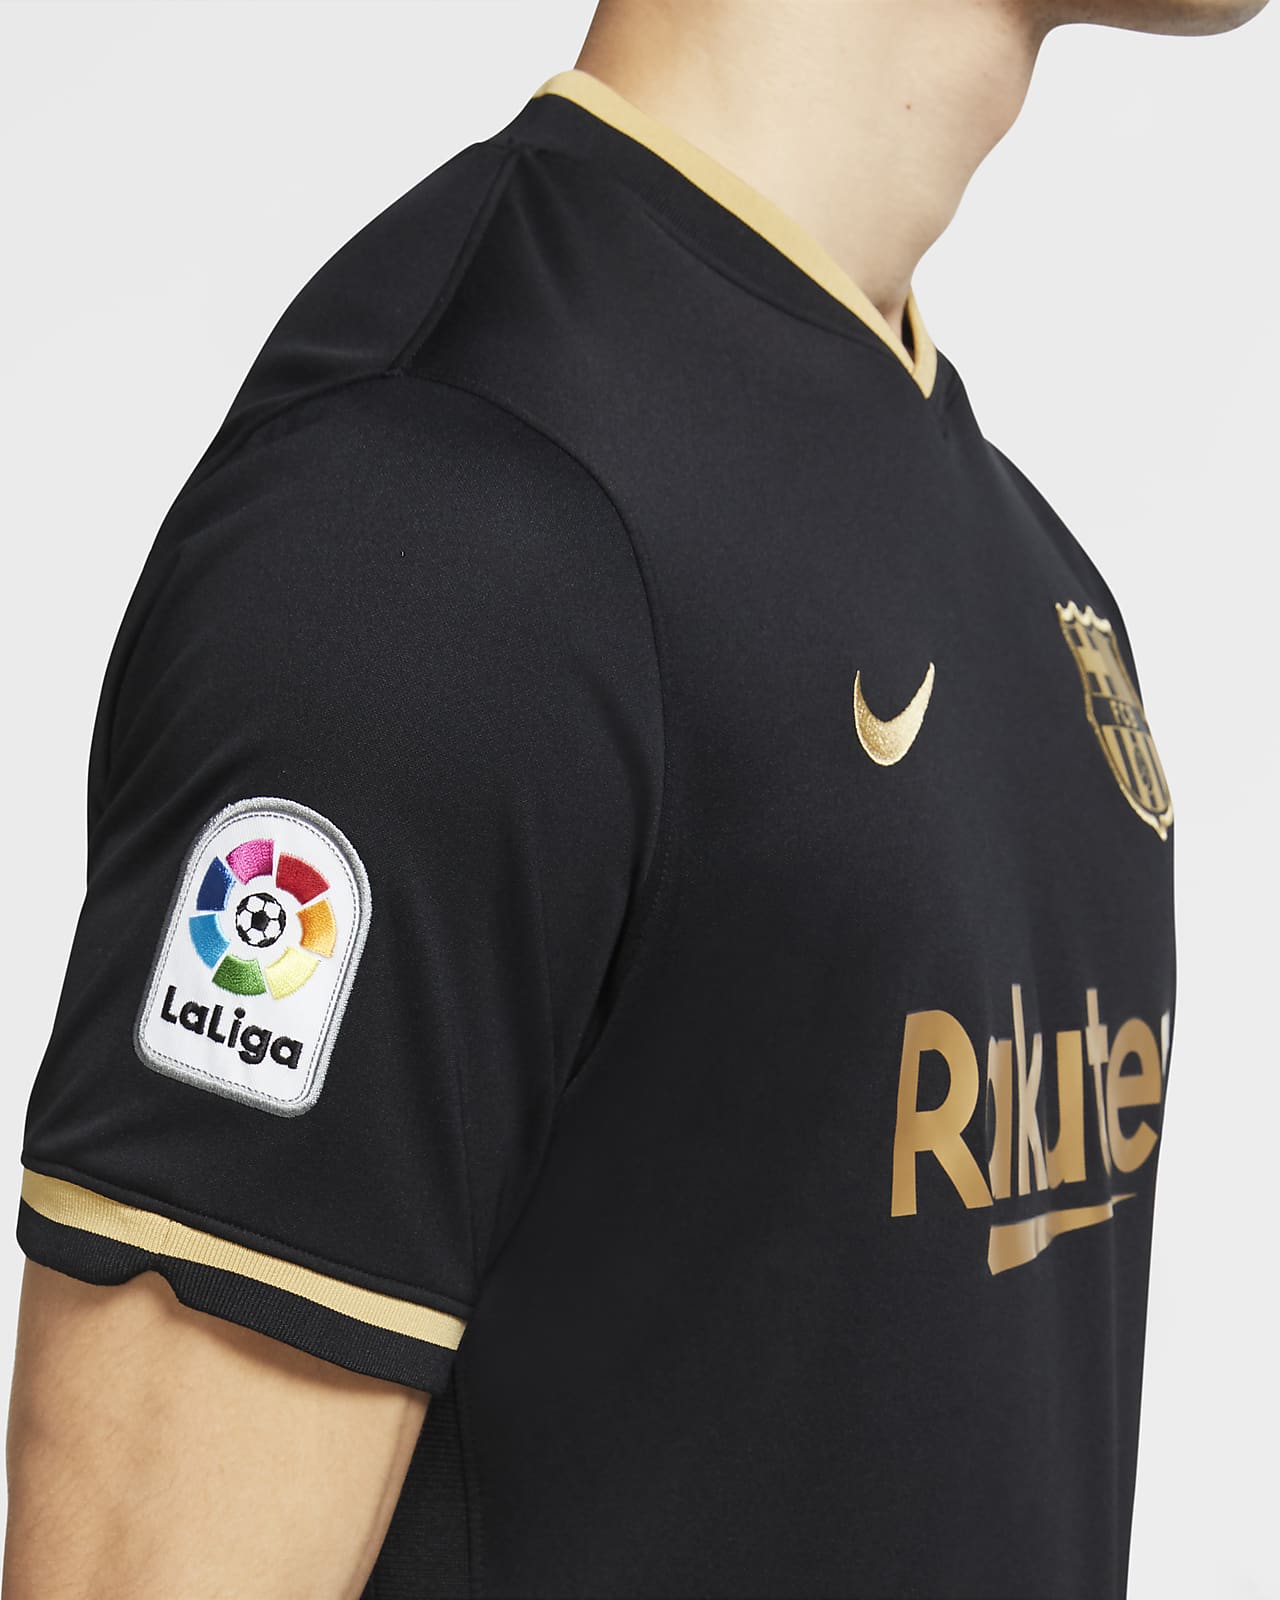 camiseta de fc barcelona 2020